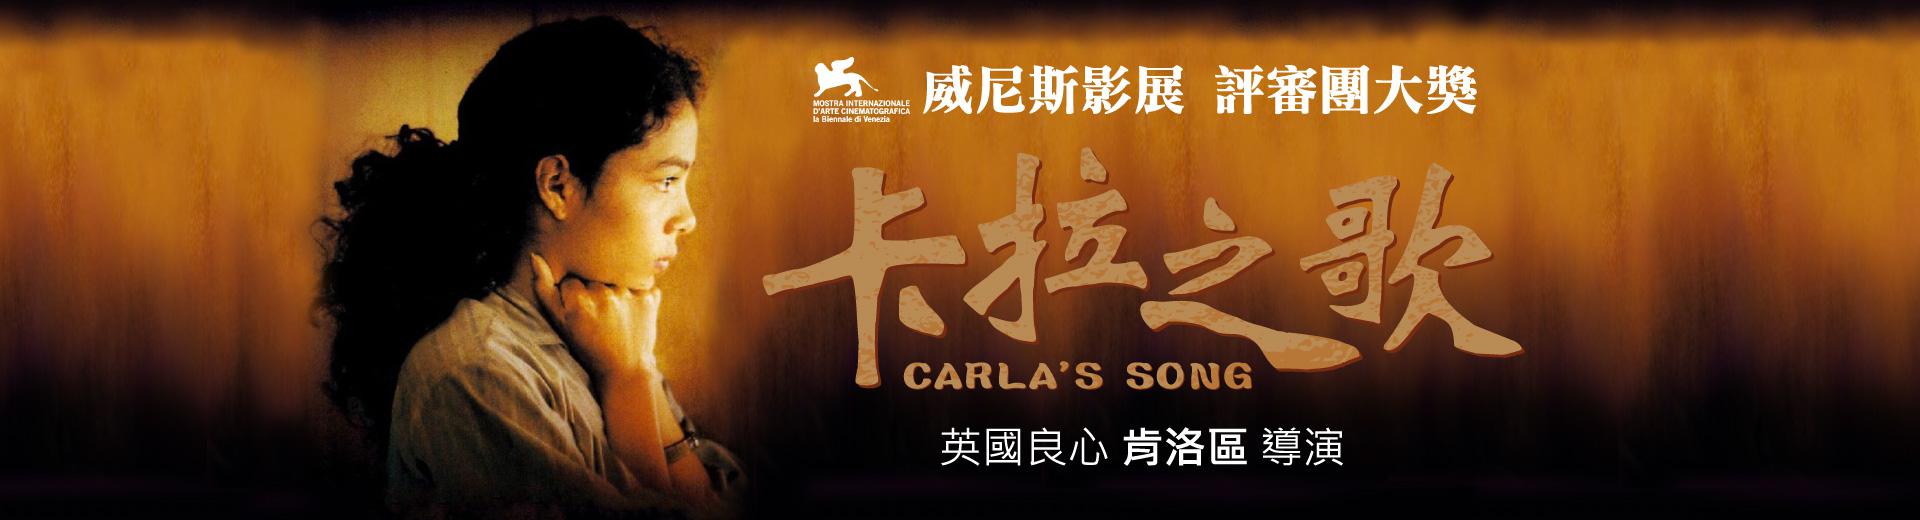 卡拉之歌Carla’s Song